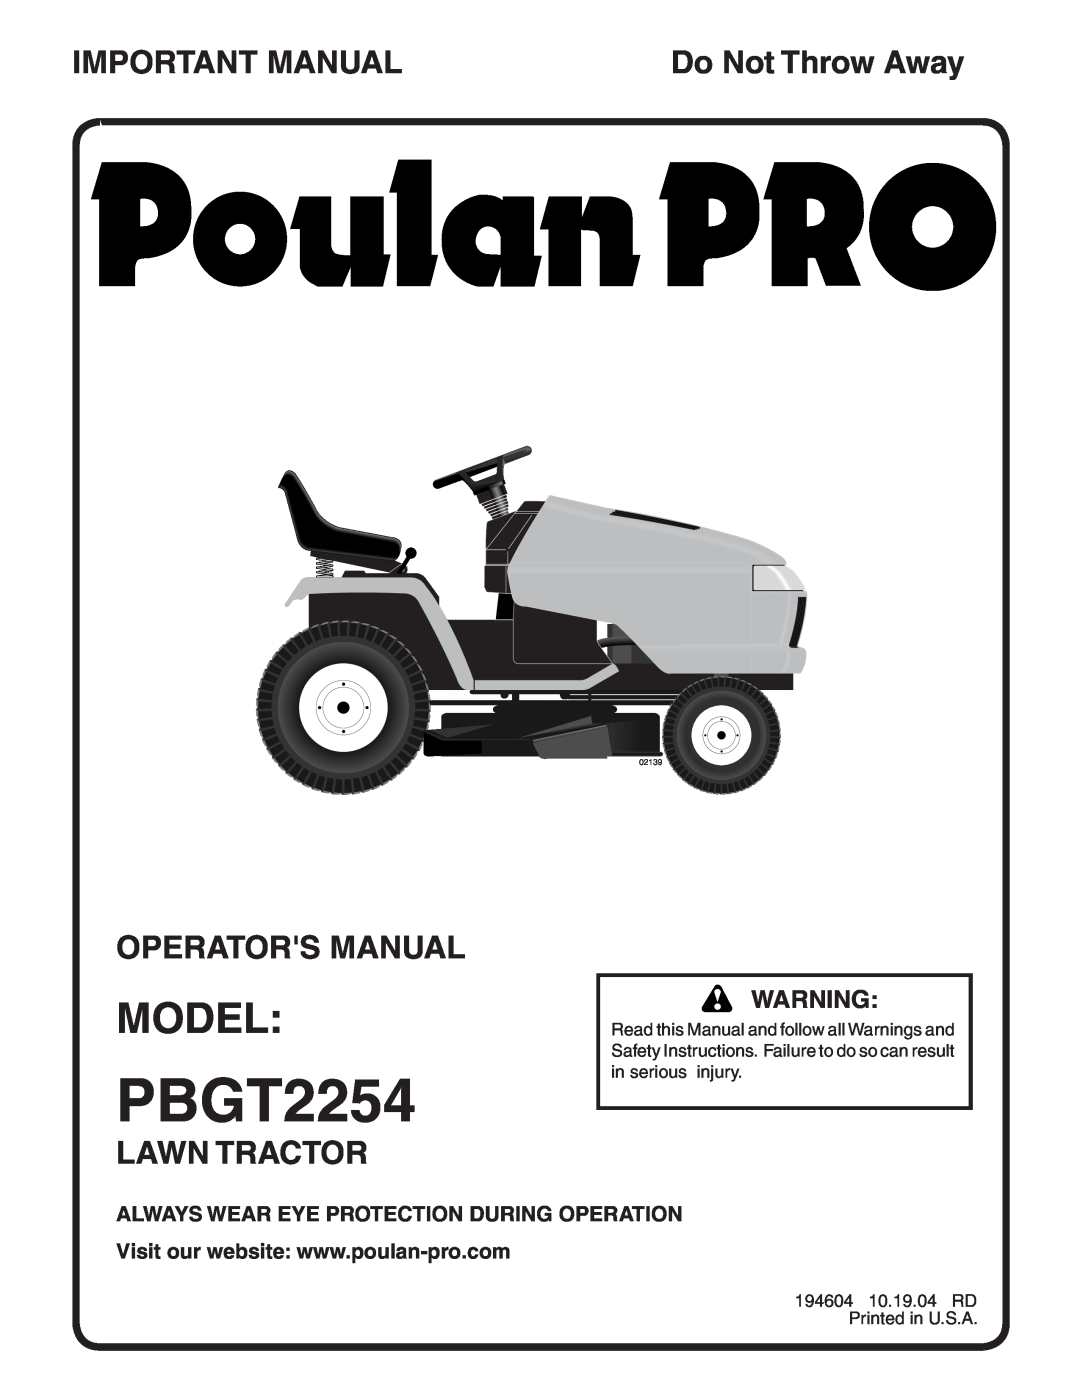 Poulan 194604 manual Model, Important Manual, Operators Manual, Lawn Tractor, Do Not Throw Away, PBGT2254, 02139 